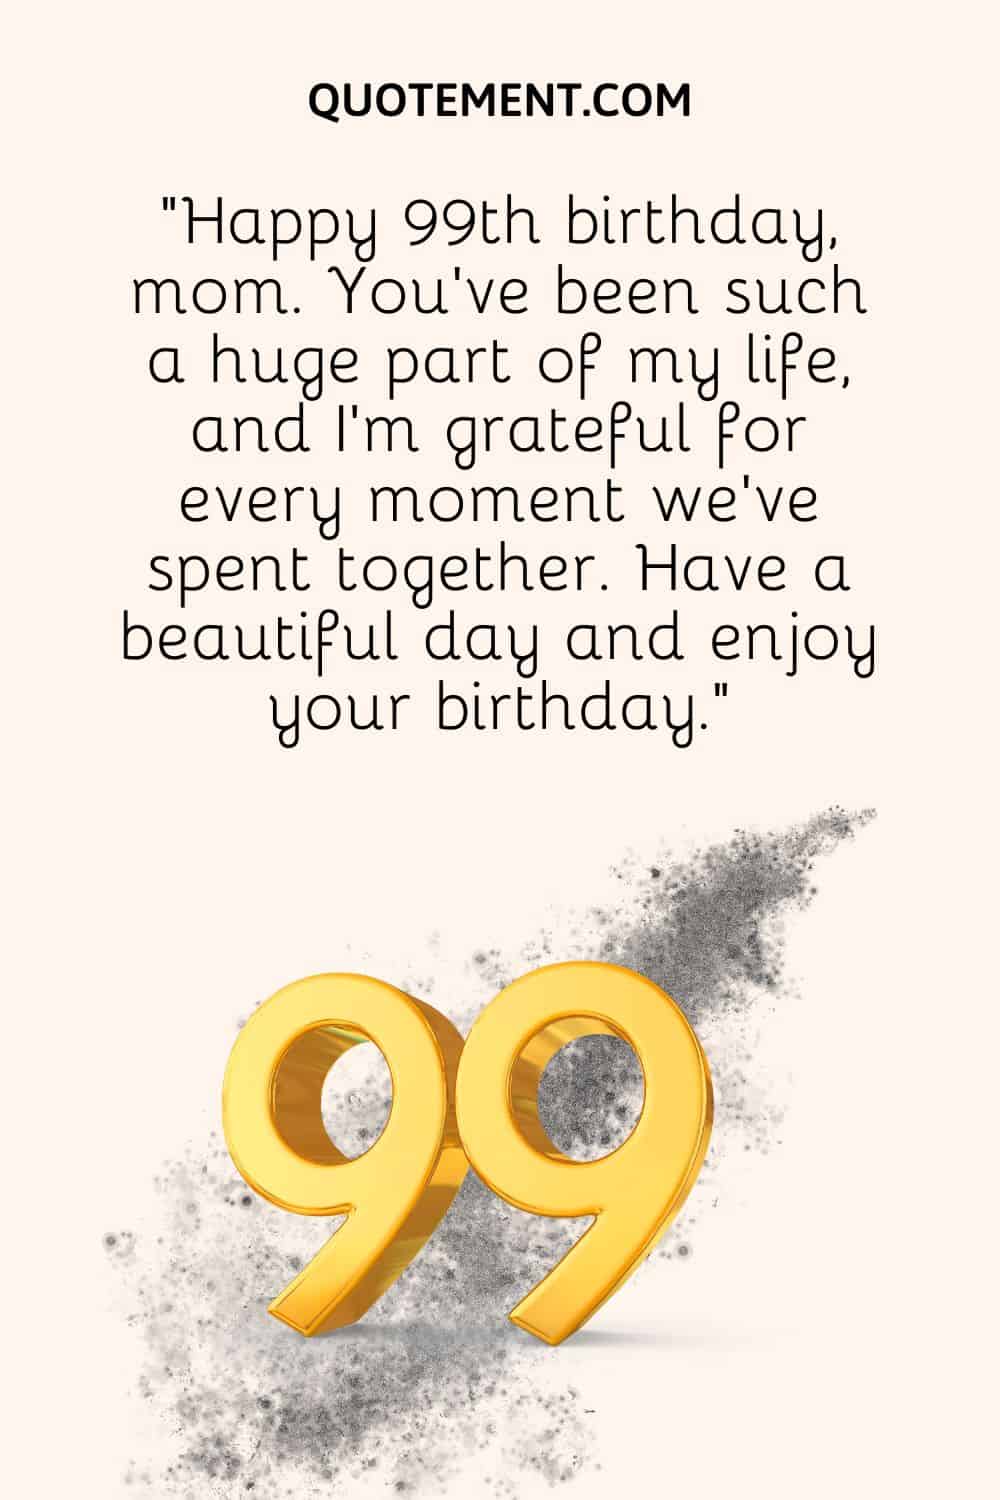 “Happy 99th birthday, mom